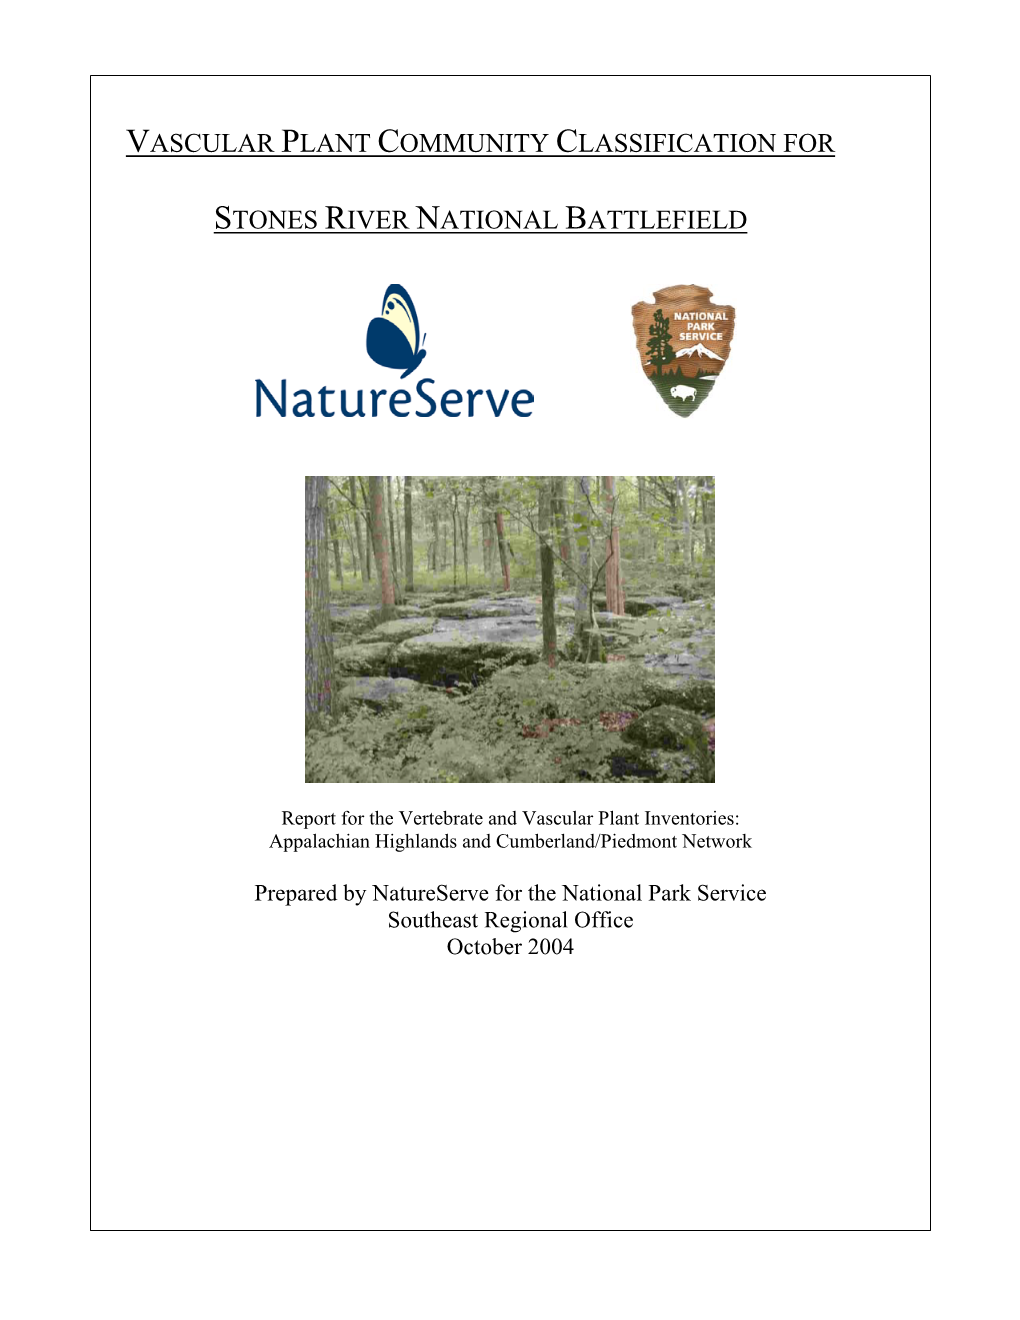 Vascular Plant Community Classification for Stones River National Battlefield